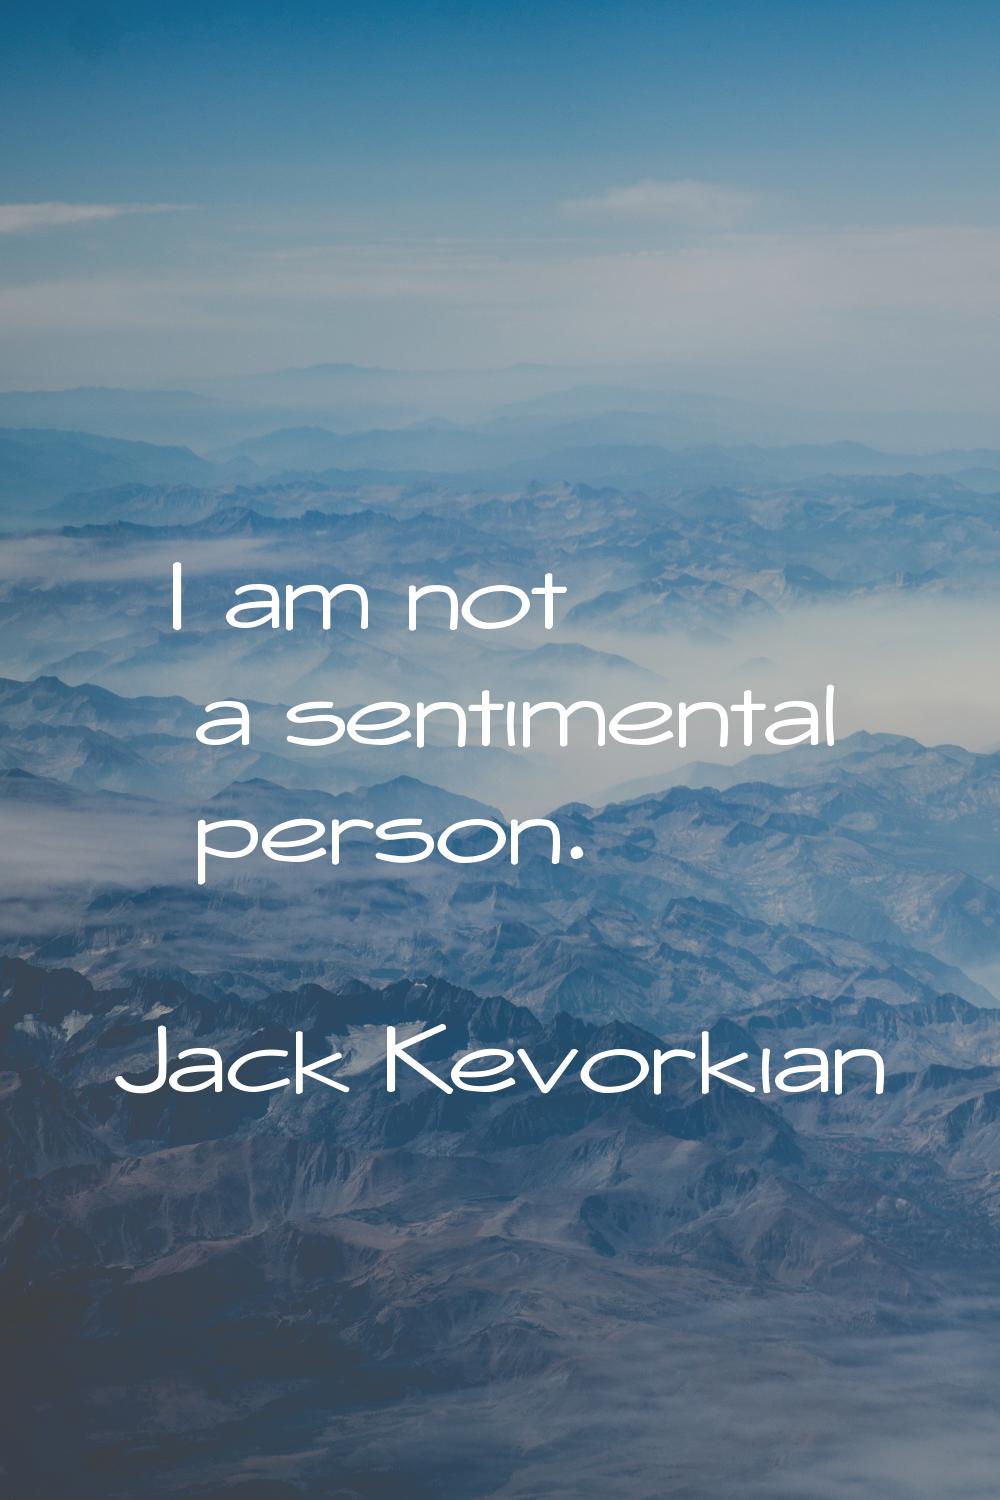 I am not a sentimental person.